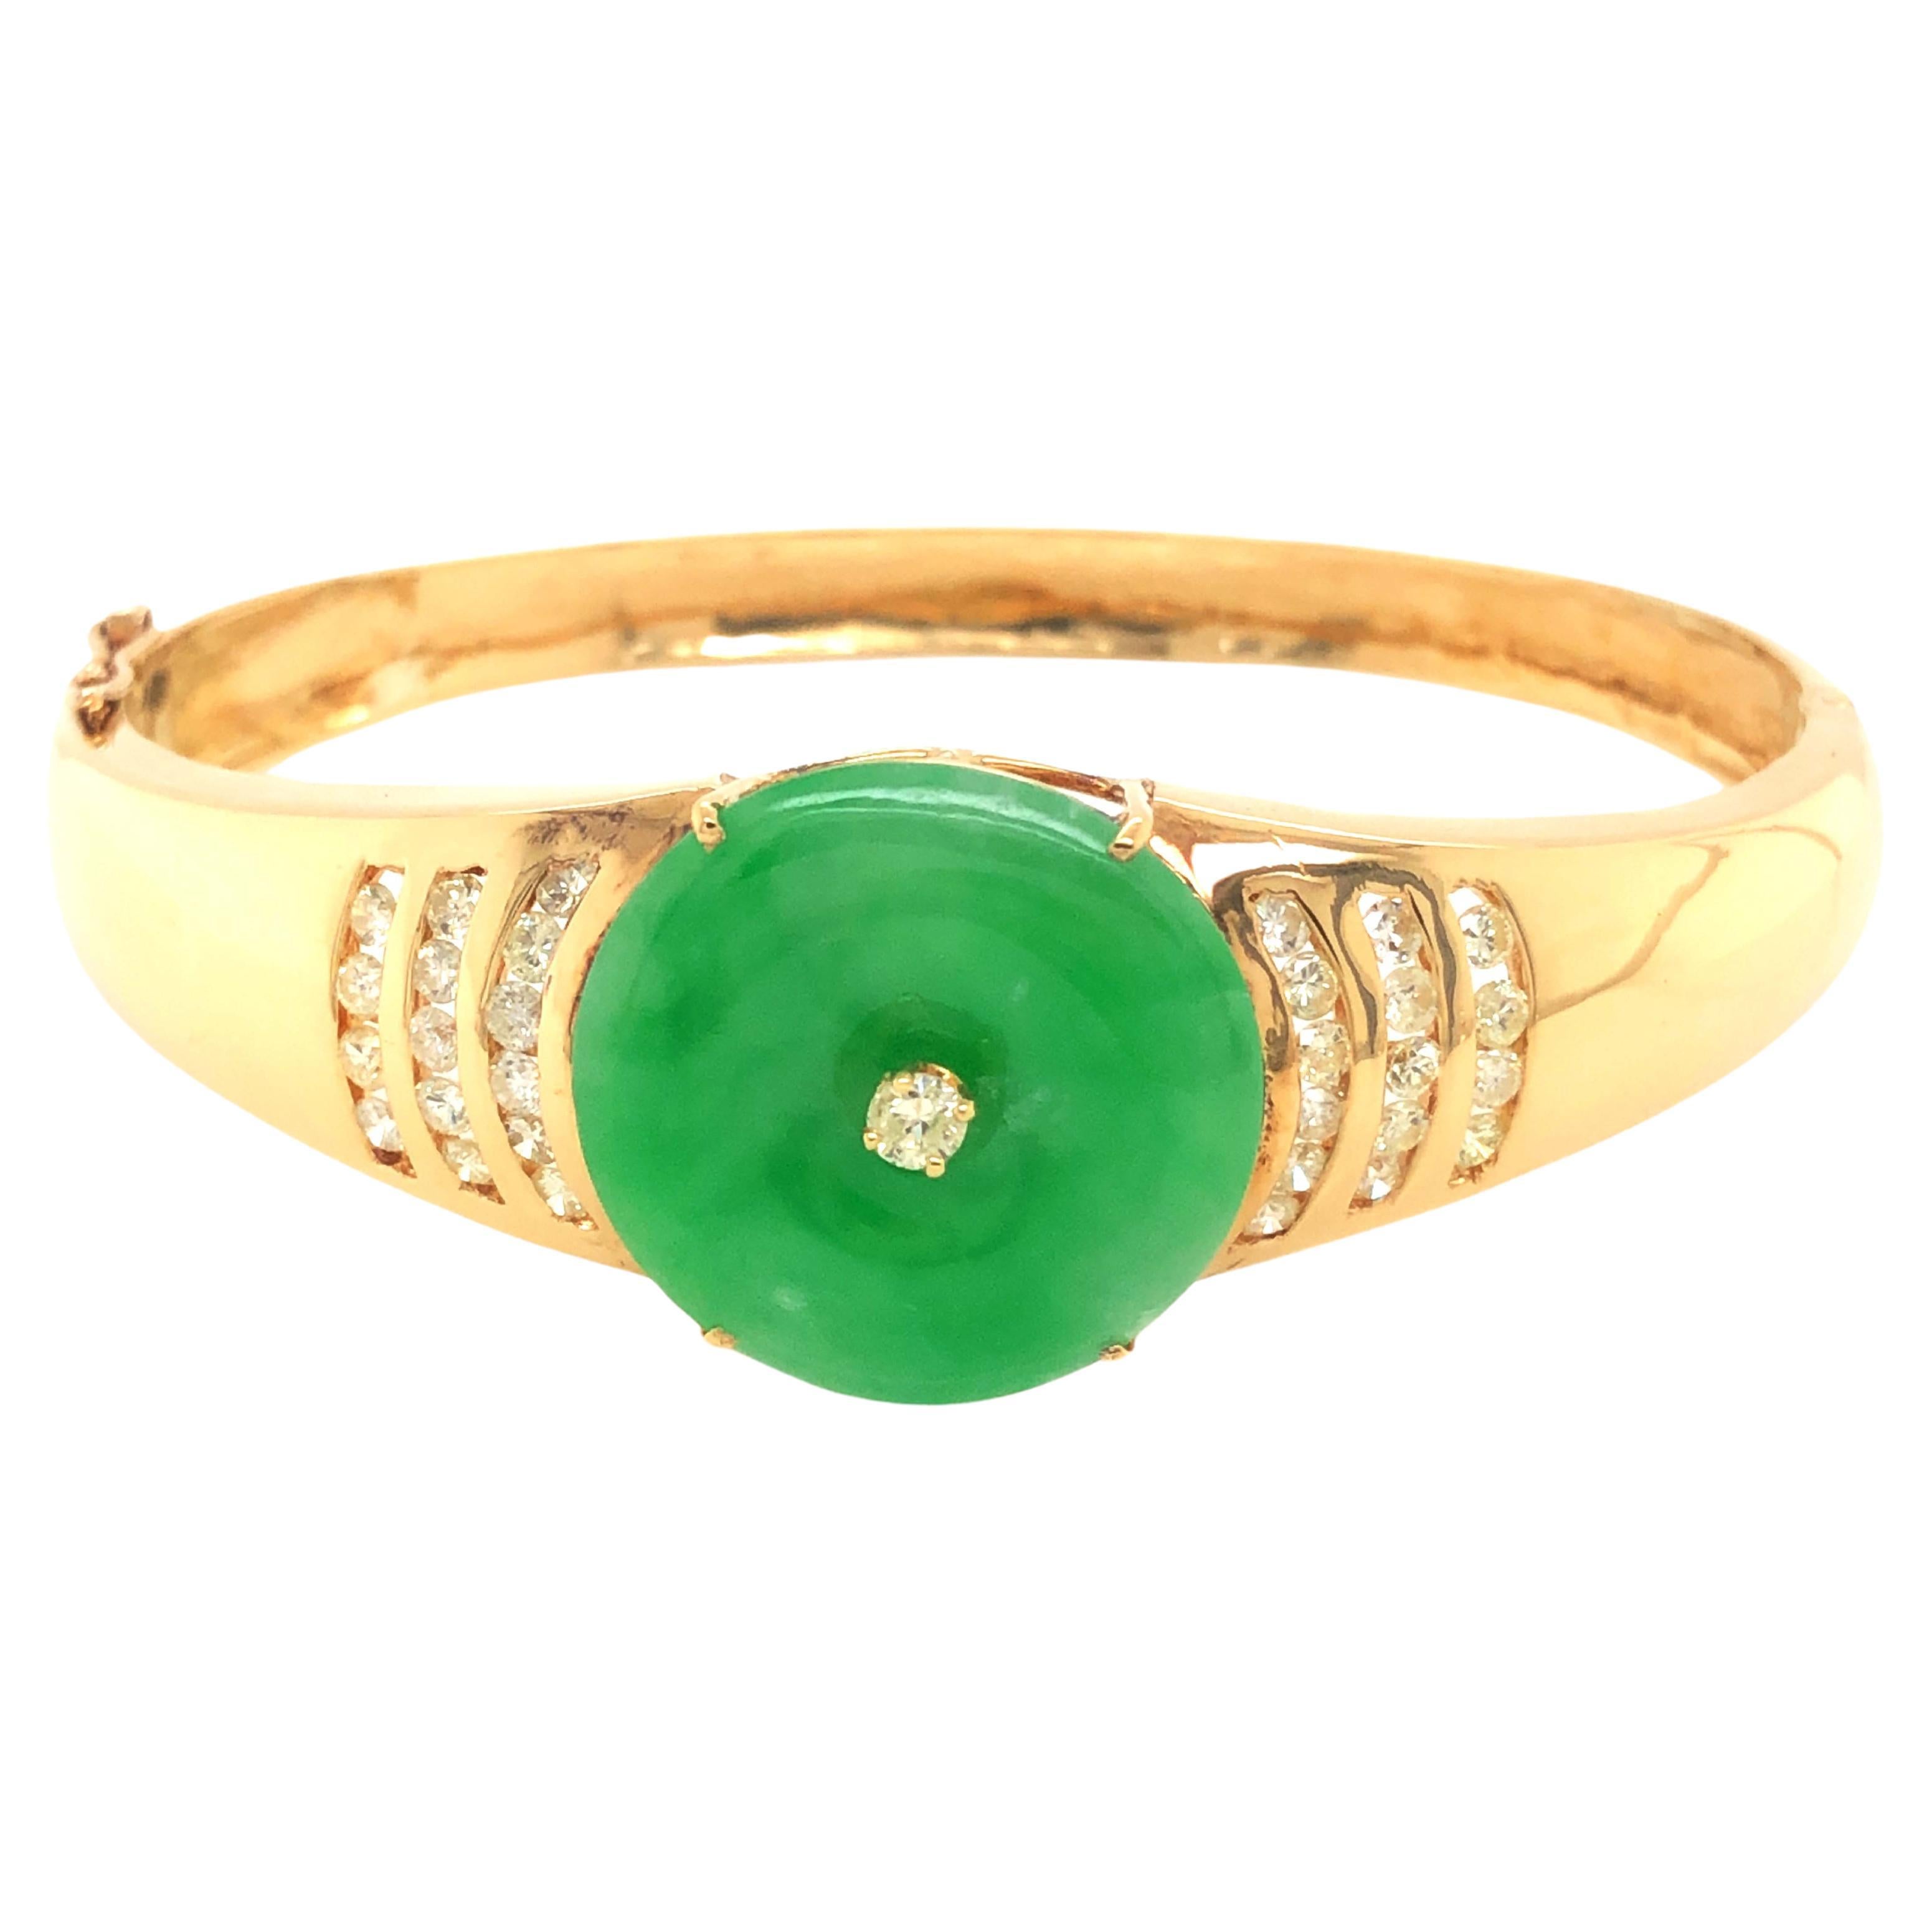 Imperial Green Jade Bracelet with 14K/18K Gold